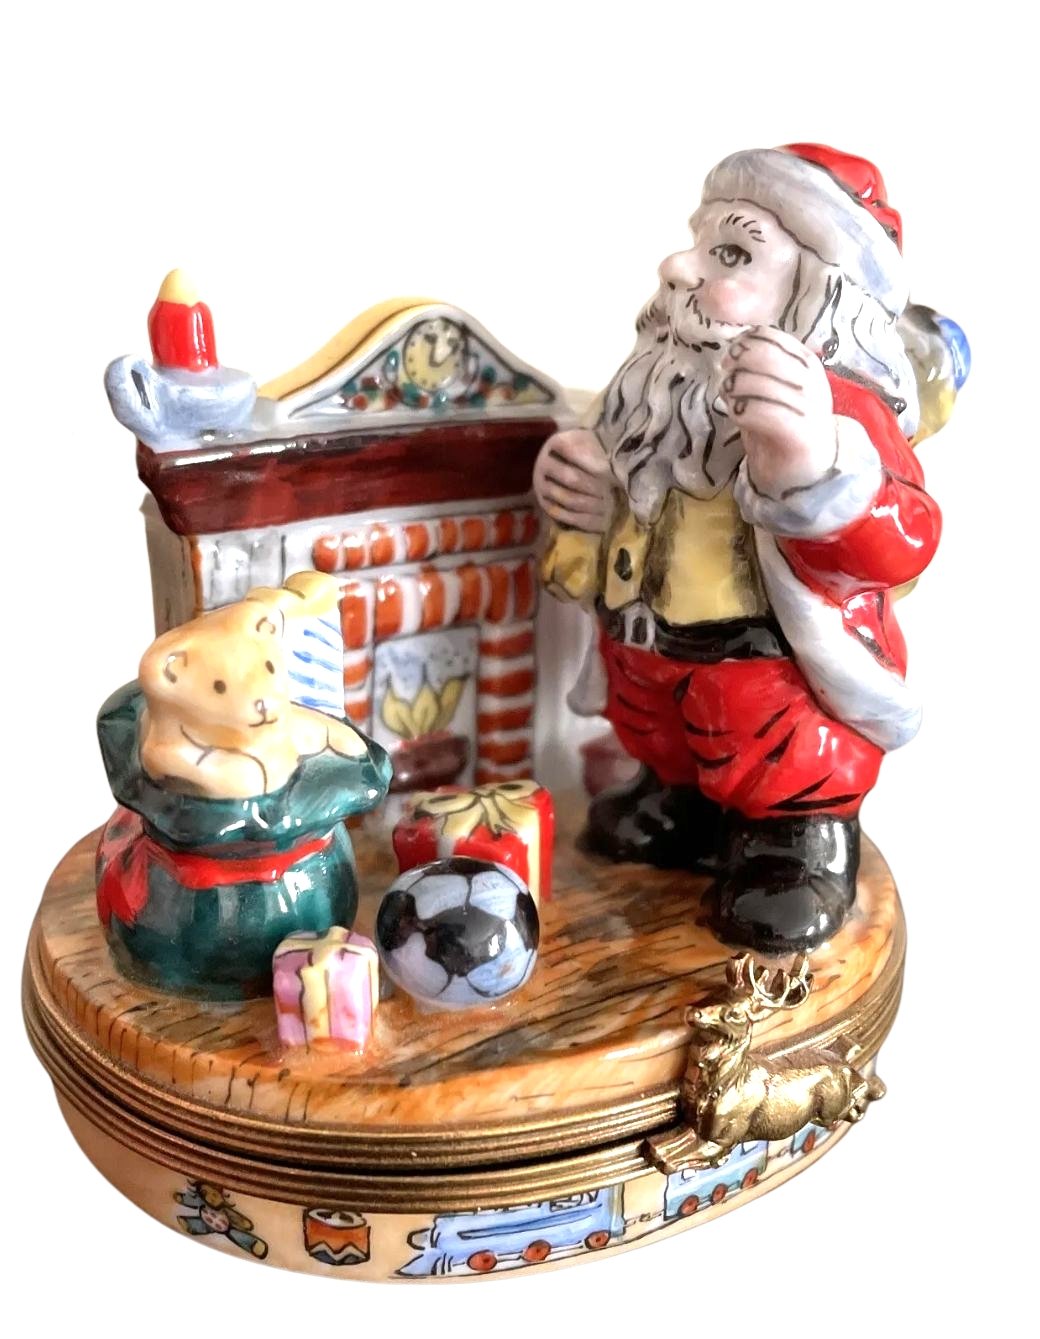 Santa by Chimney Leaving Presents